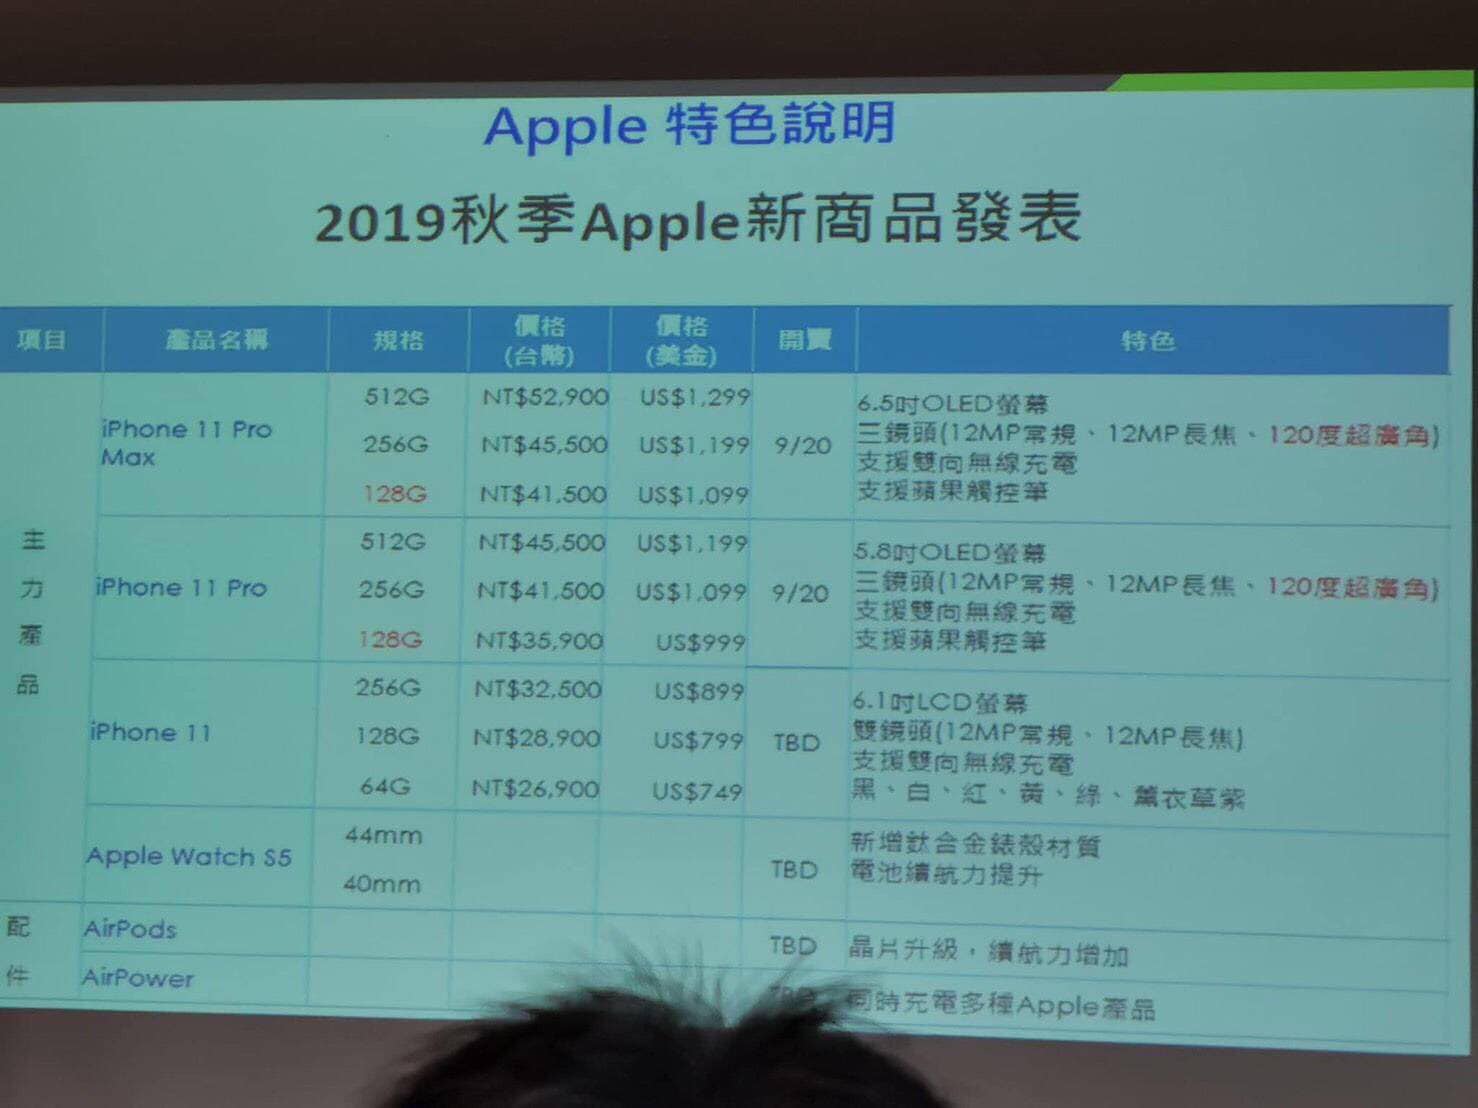 iphone11 taiwan price exposure money